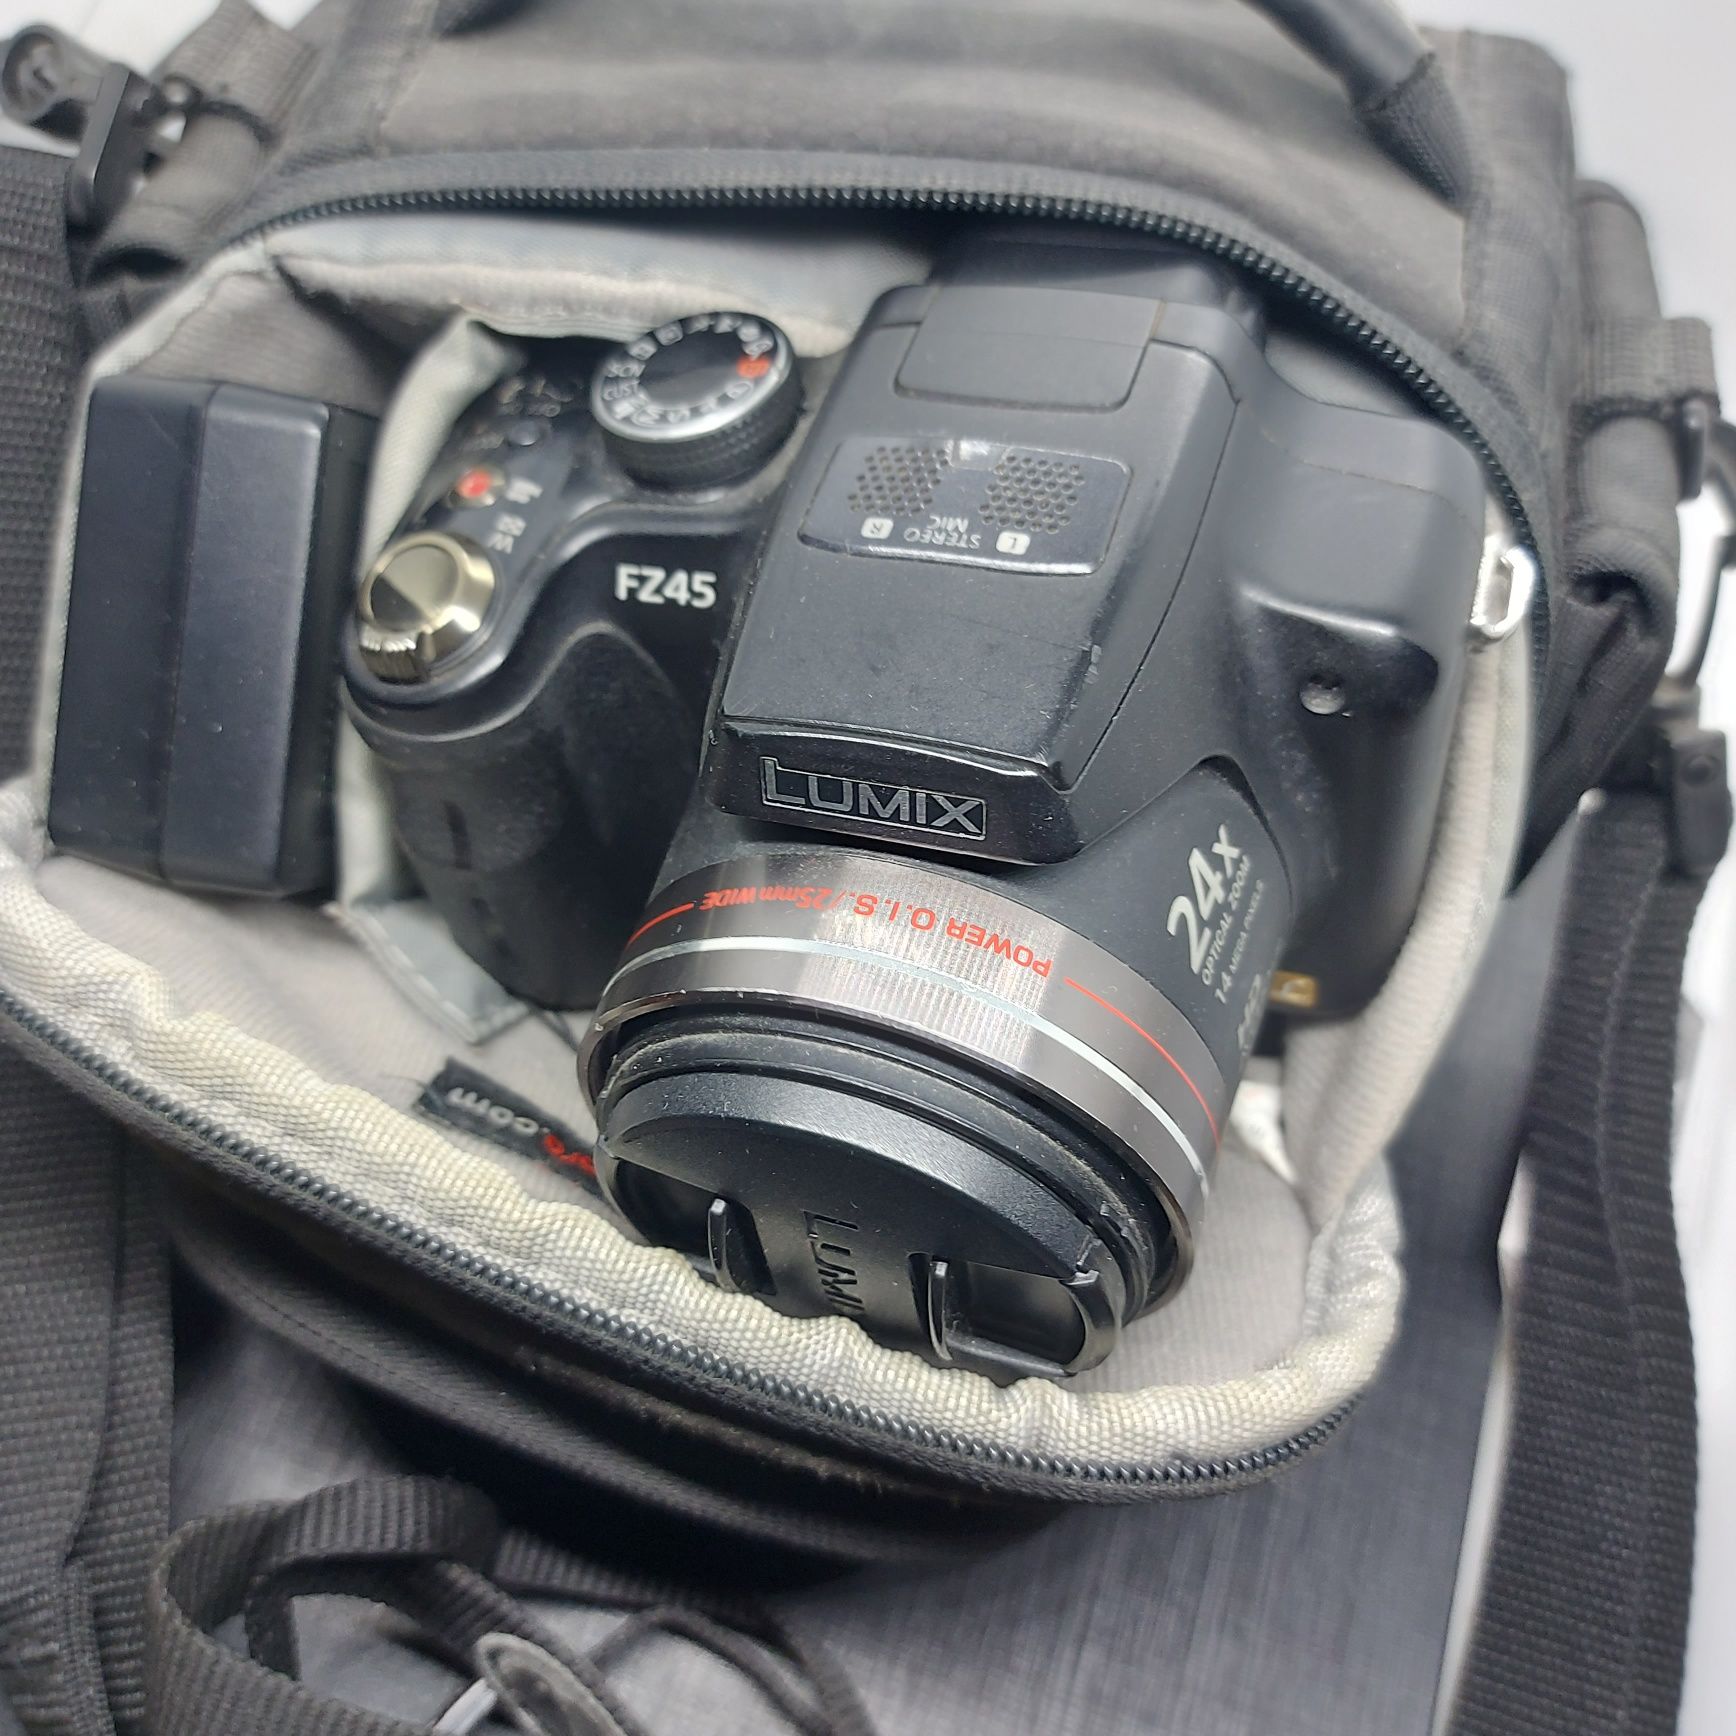 Продам фотоаппарат Panasonic Lumix FZ45